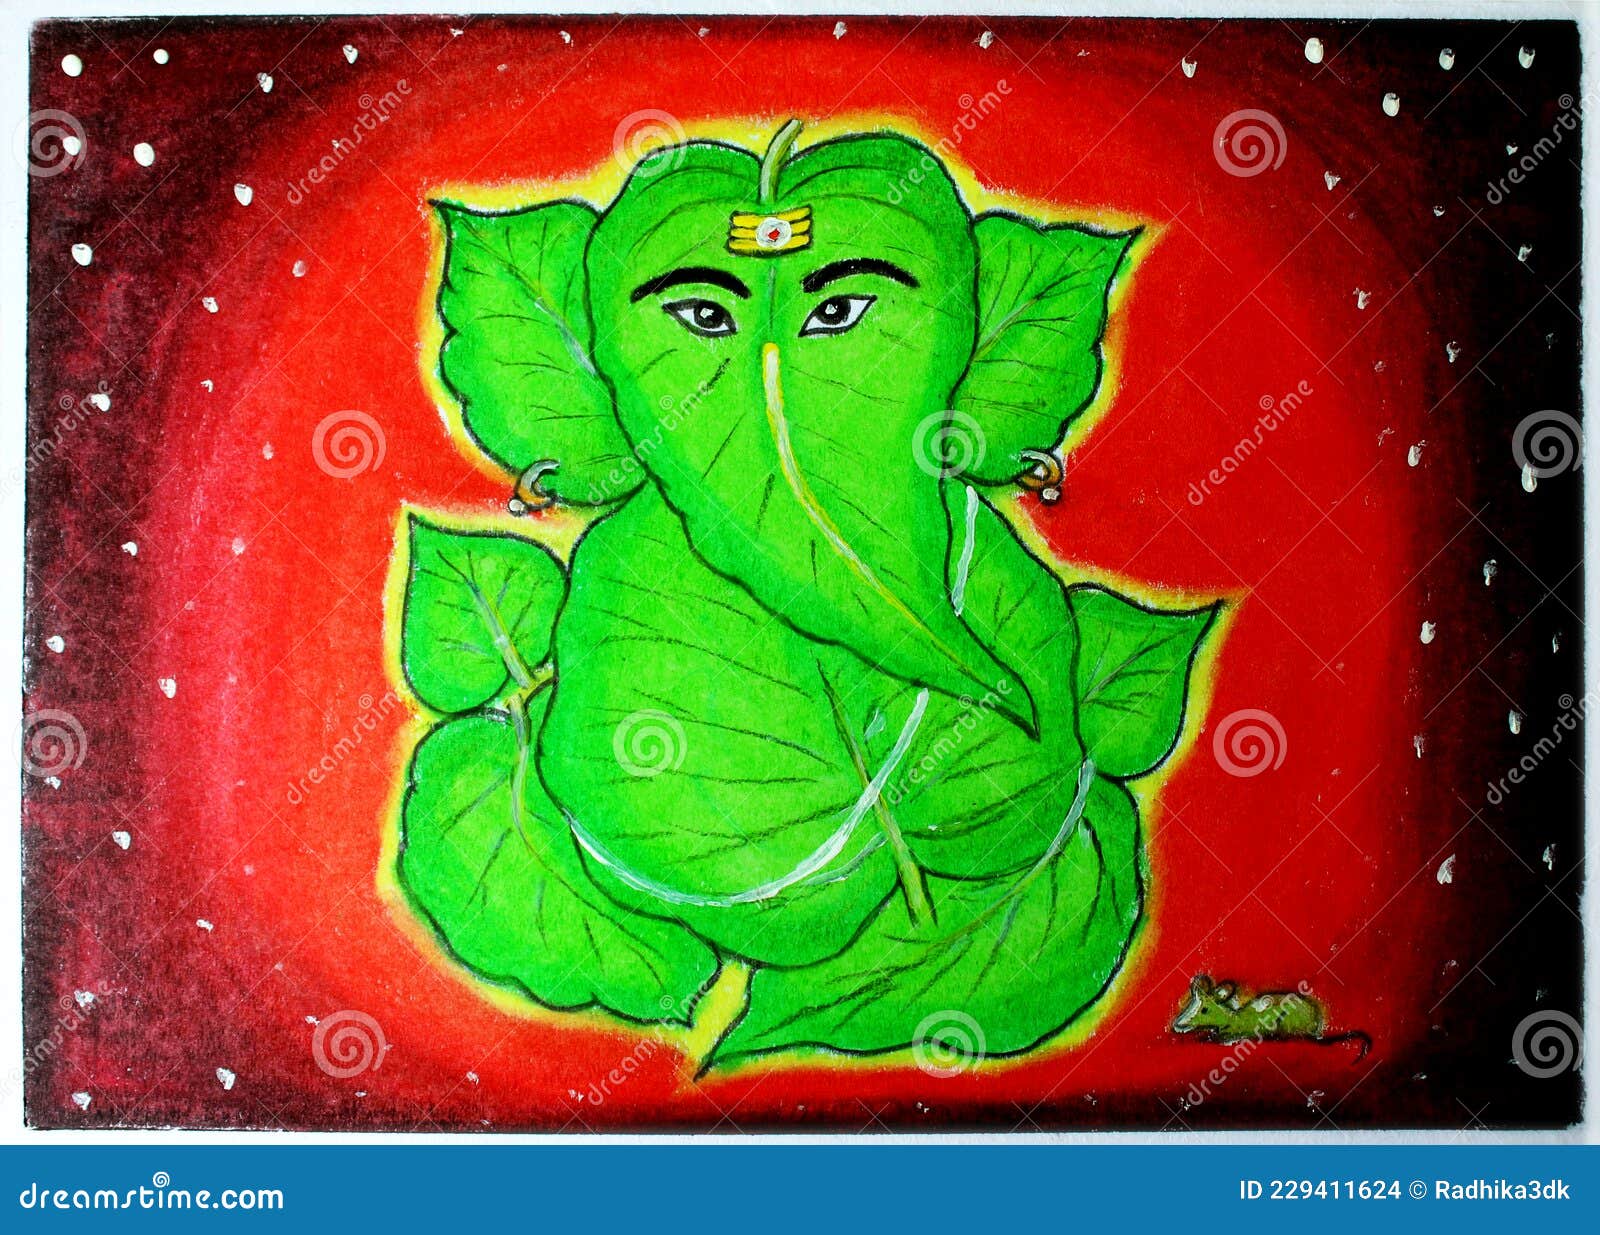 Leaf ganesha paintings editorial stock image. Image of modern - 229411624